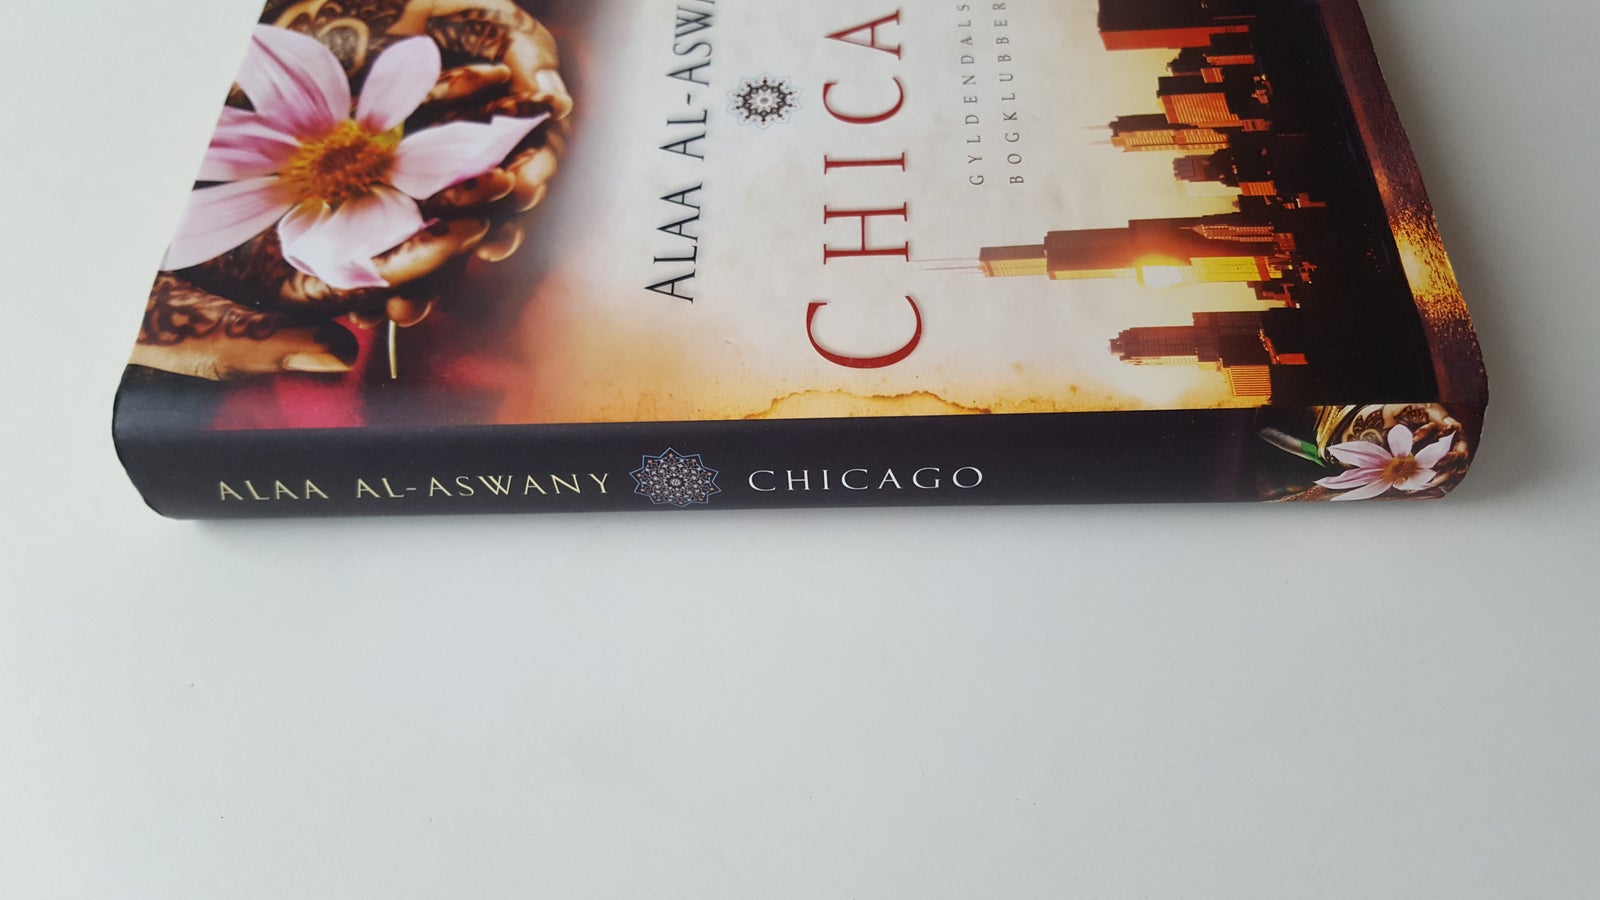 Chicago, Alaa Al-Aswany, genre: roman